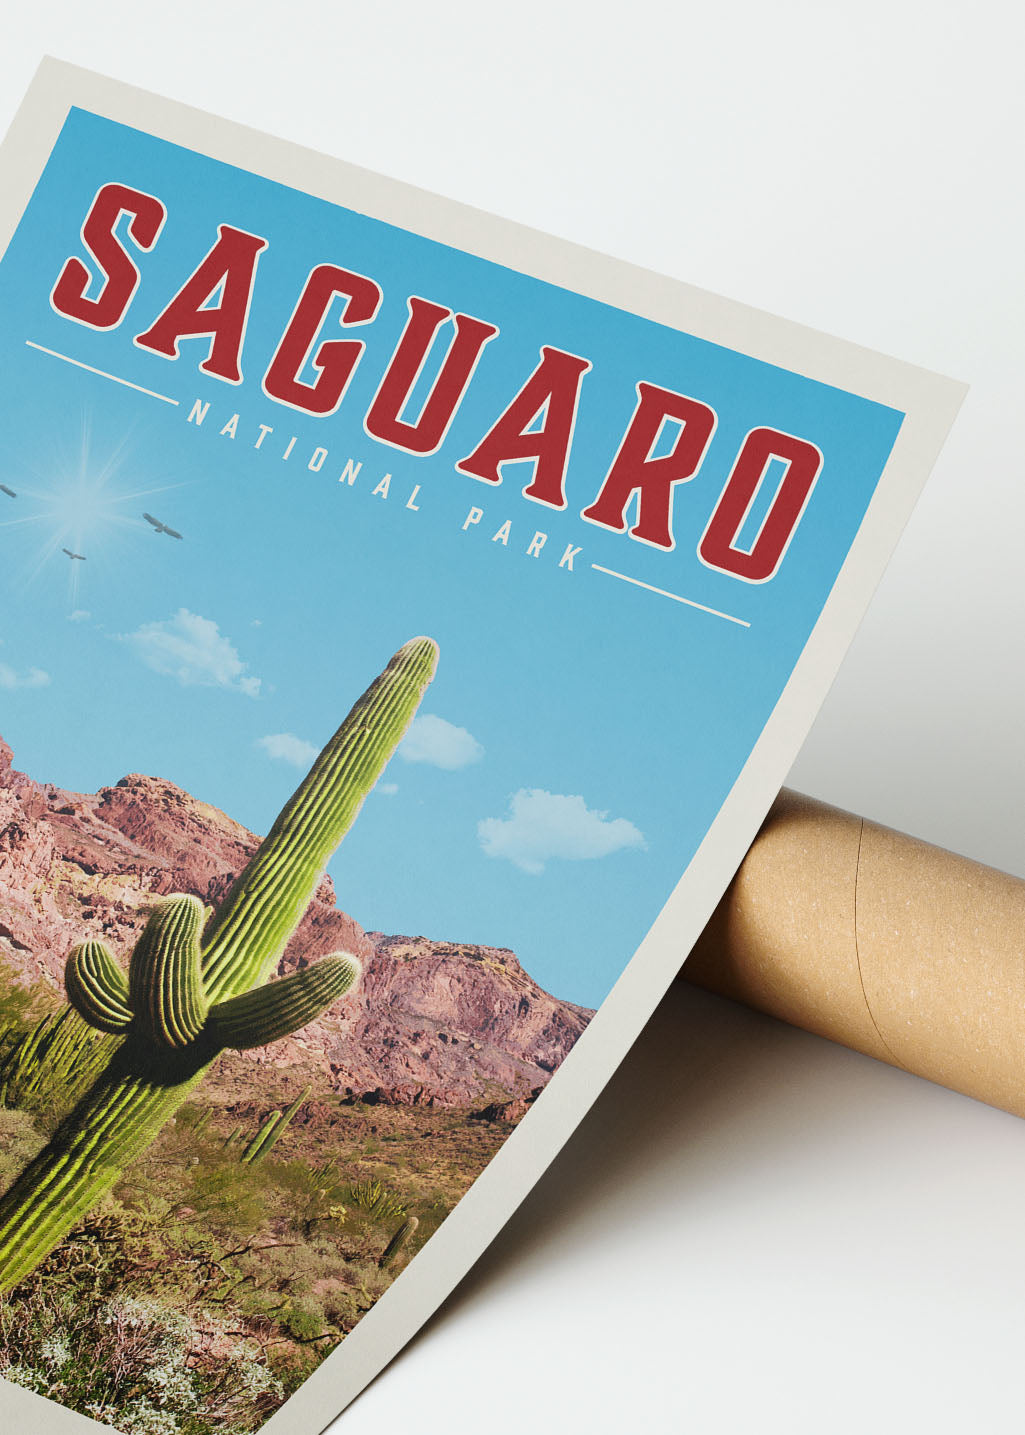 Saguaro National Park - Vintage Travel Print